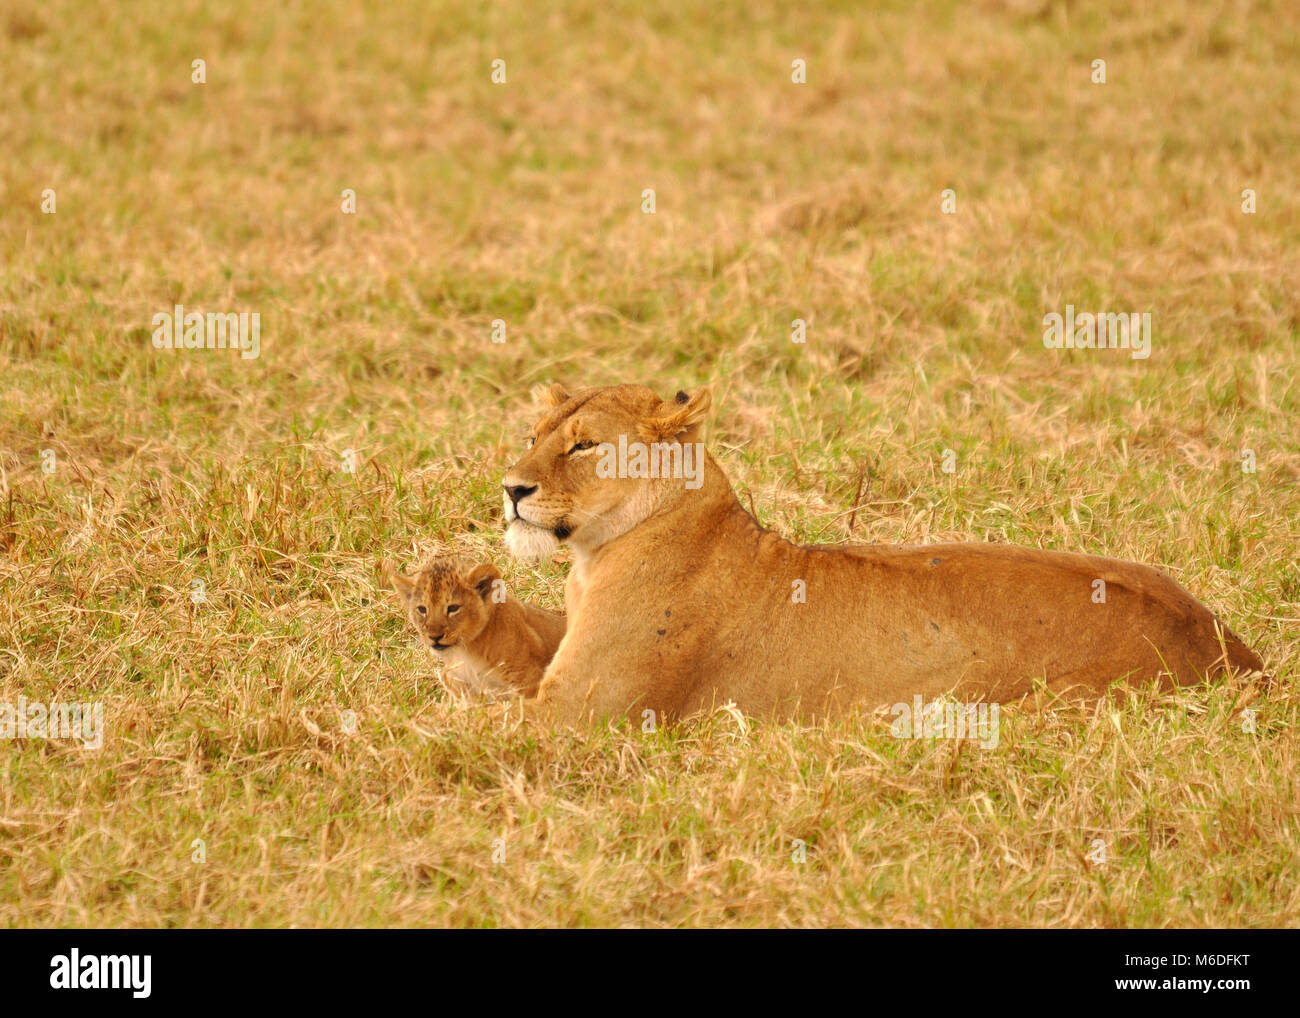 Madre y Cub (Panthera leo) en la sabana del parque nacional Serengeti, Tanzania Foto de stock